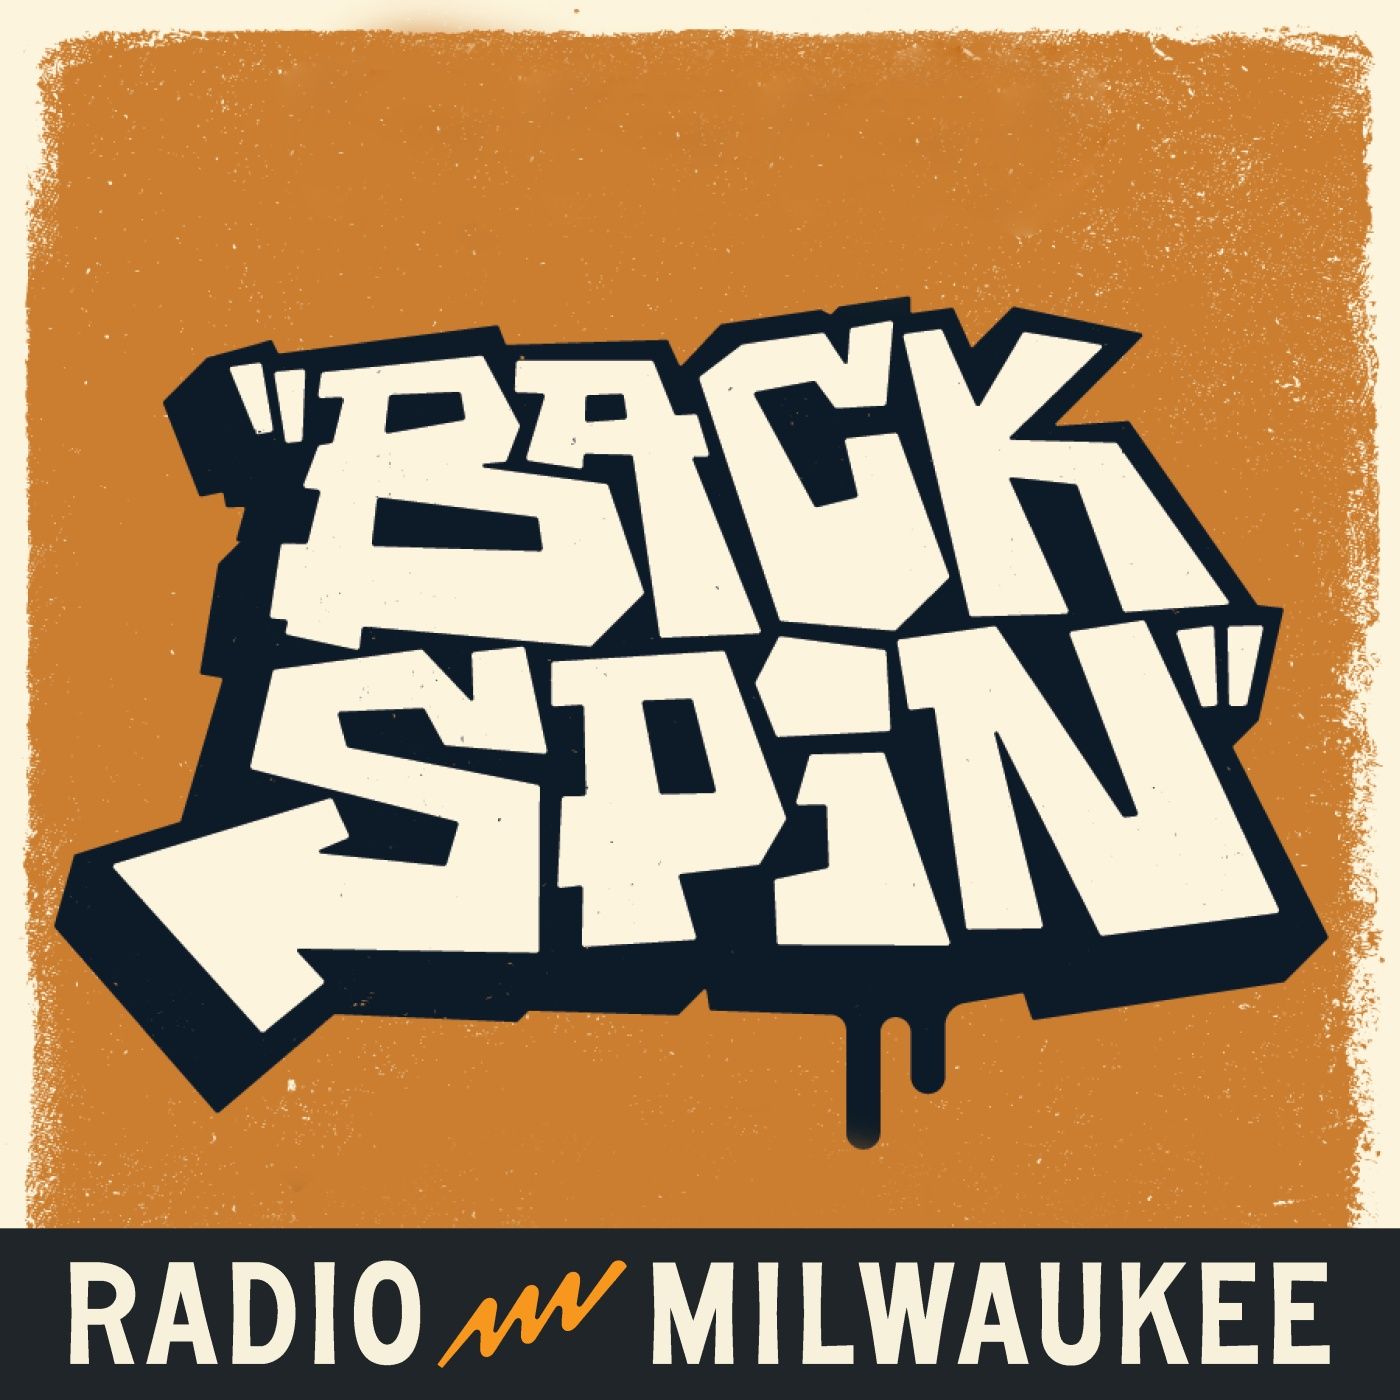 Backspin: Milwaukee’s First Hip-Hop Song